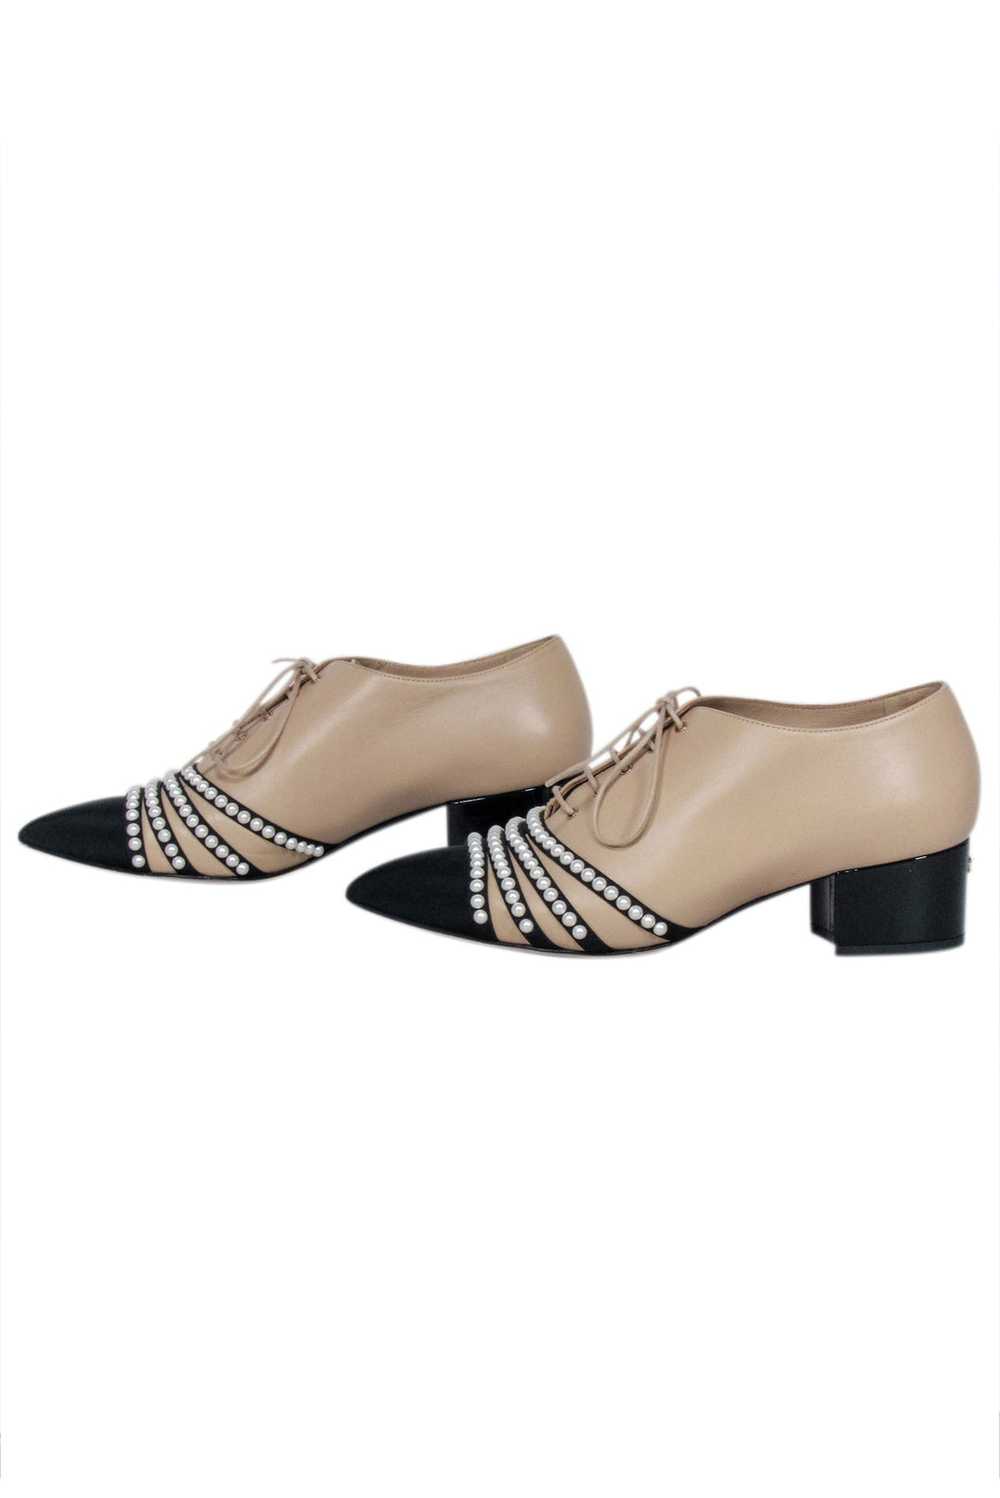 Chanel - Beige, Black, & Pearl Low Heel Loafers S… - image 3